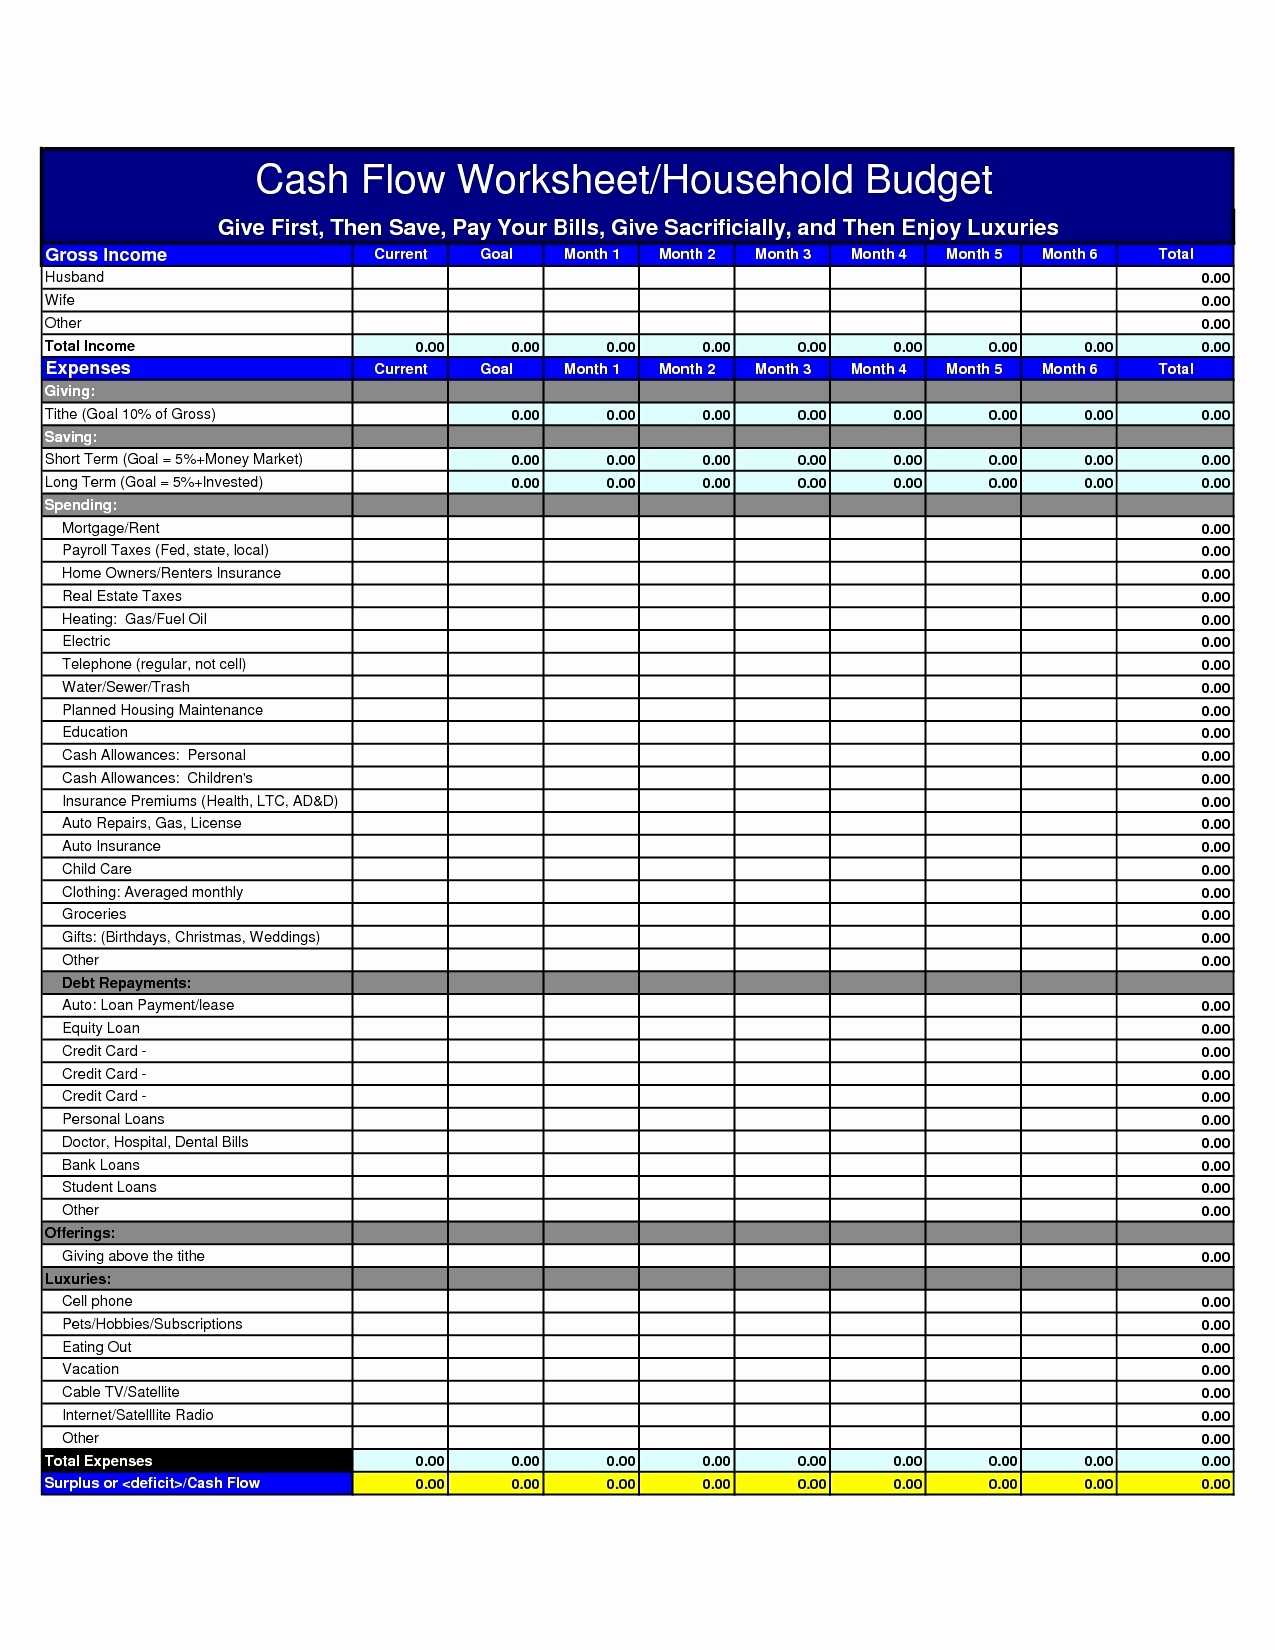 Cash Flow Budget Worksheet as Well as Student Bud Spreadsheet Template Download Beste Cash Flow